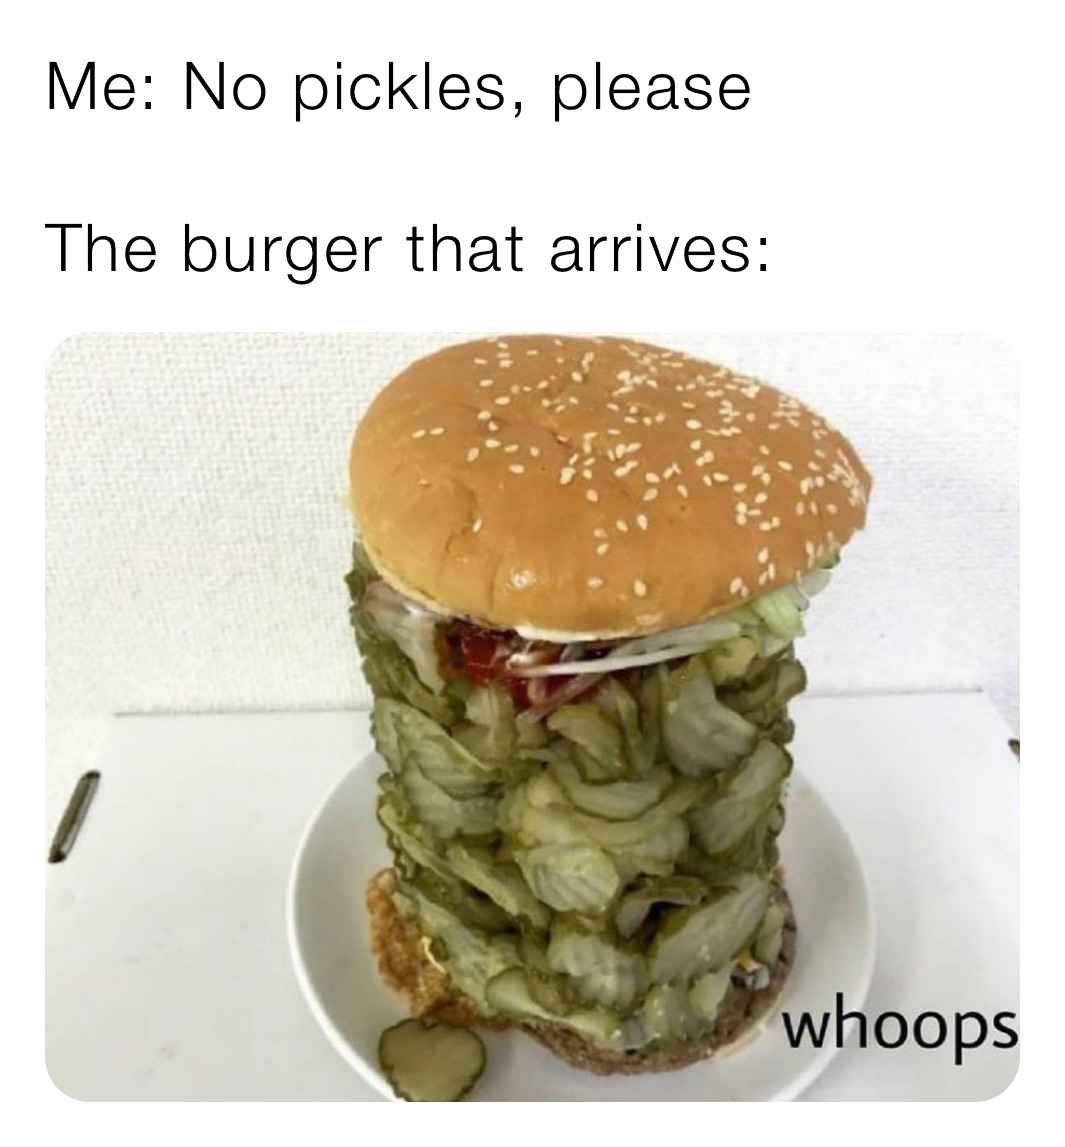 Me: No pickles, please

The burger that arrives: